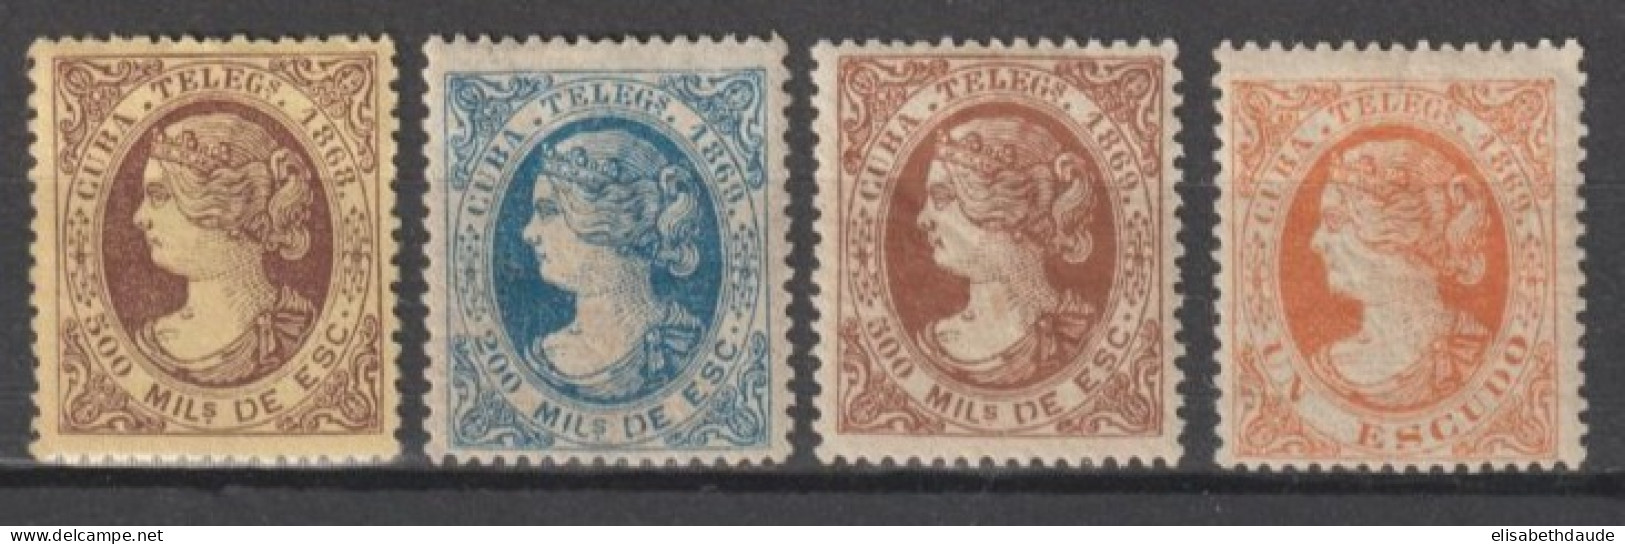 C UBA - 1868/9 - TELEGRAPHE - YVERT N°2/4 * MH - COTE = 123.5 EUR - Kuba (1874-1898)